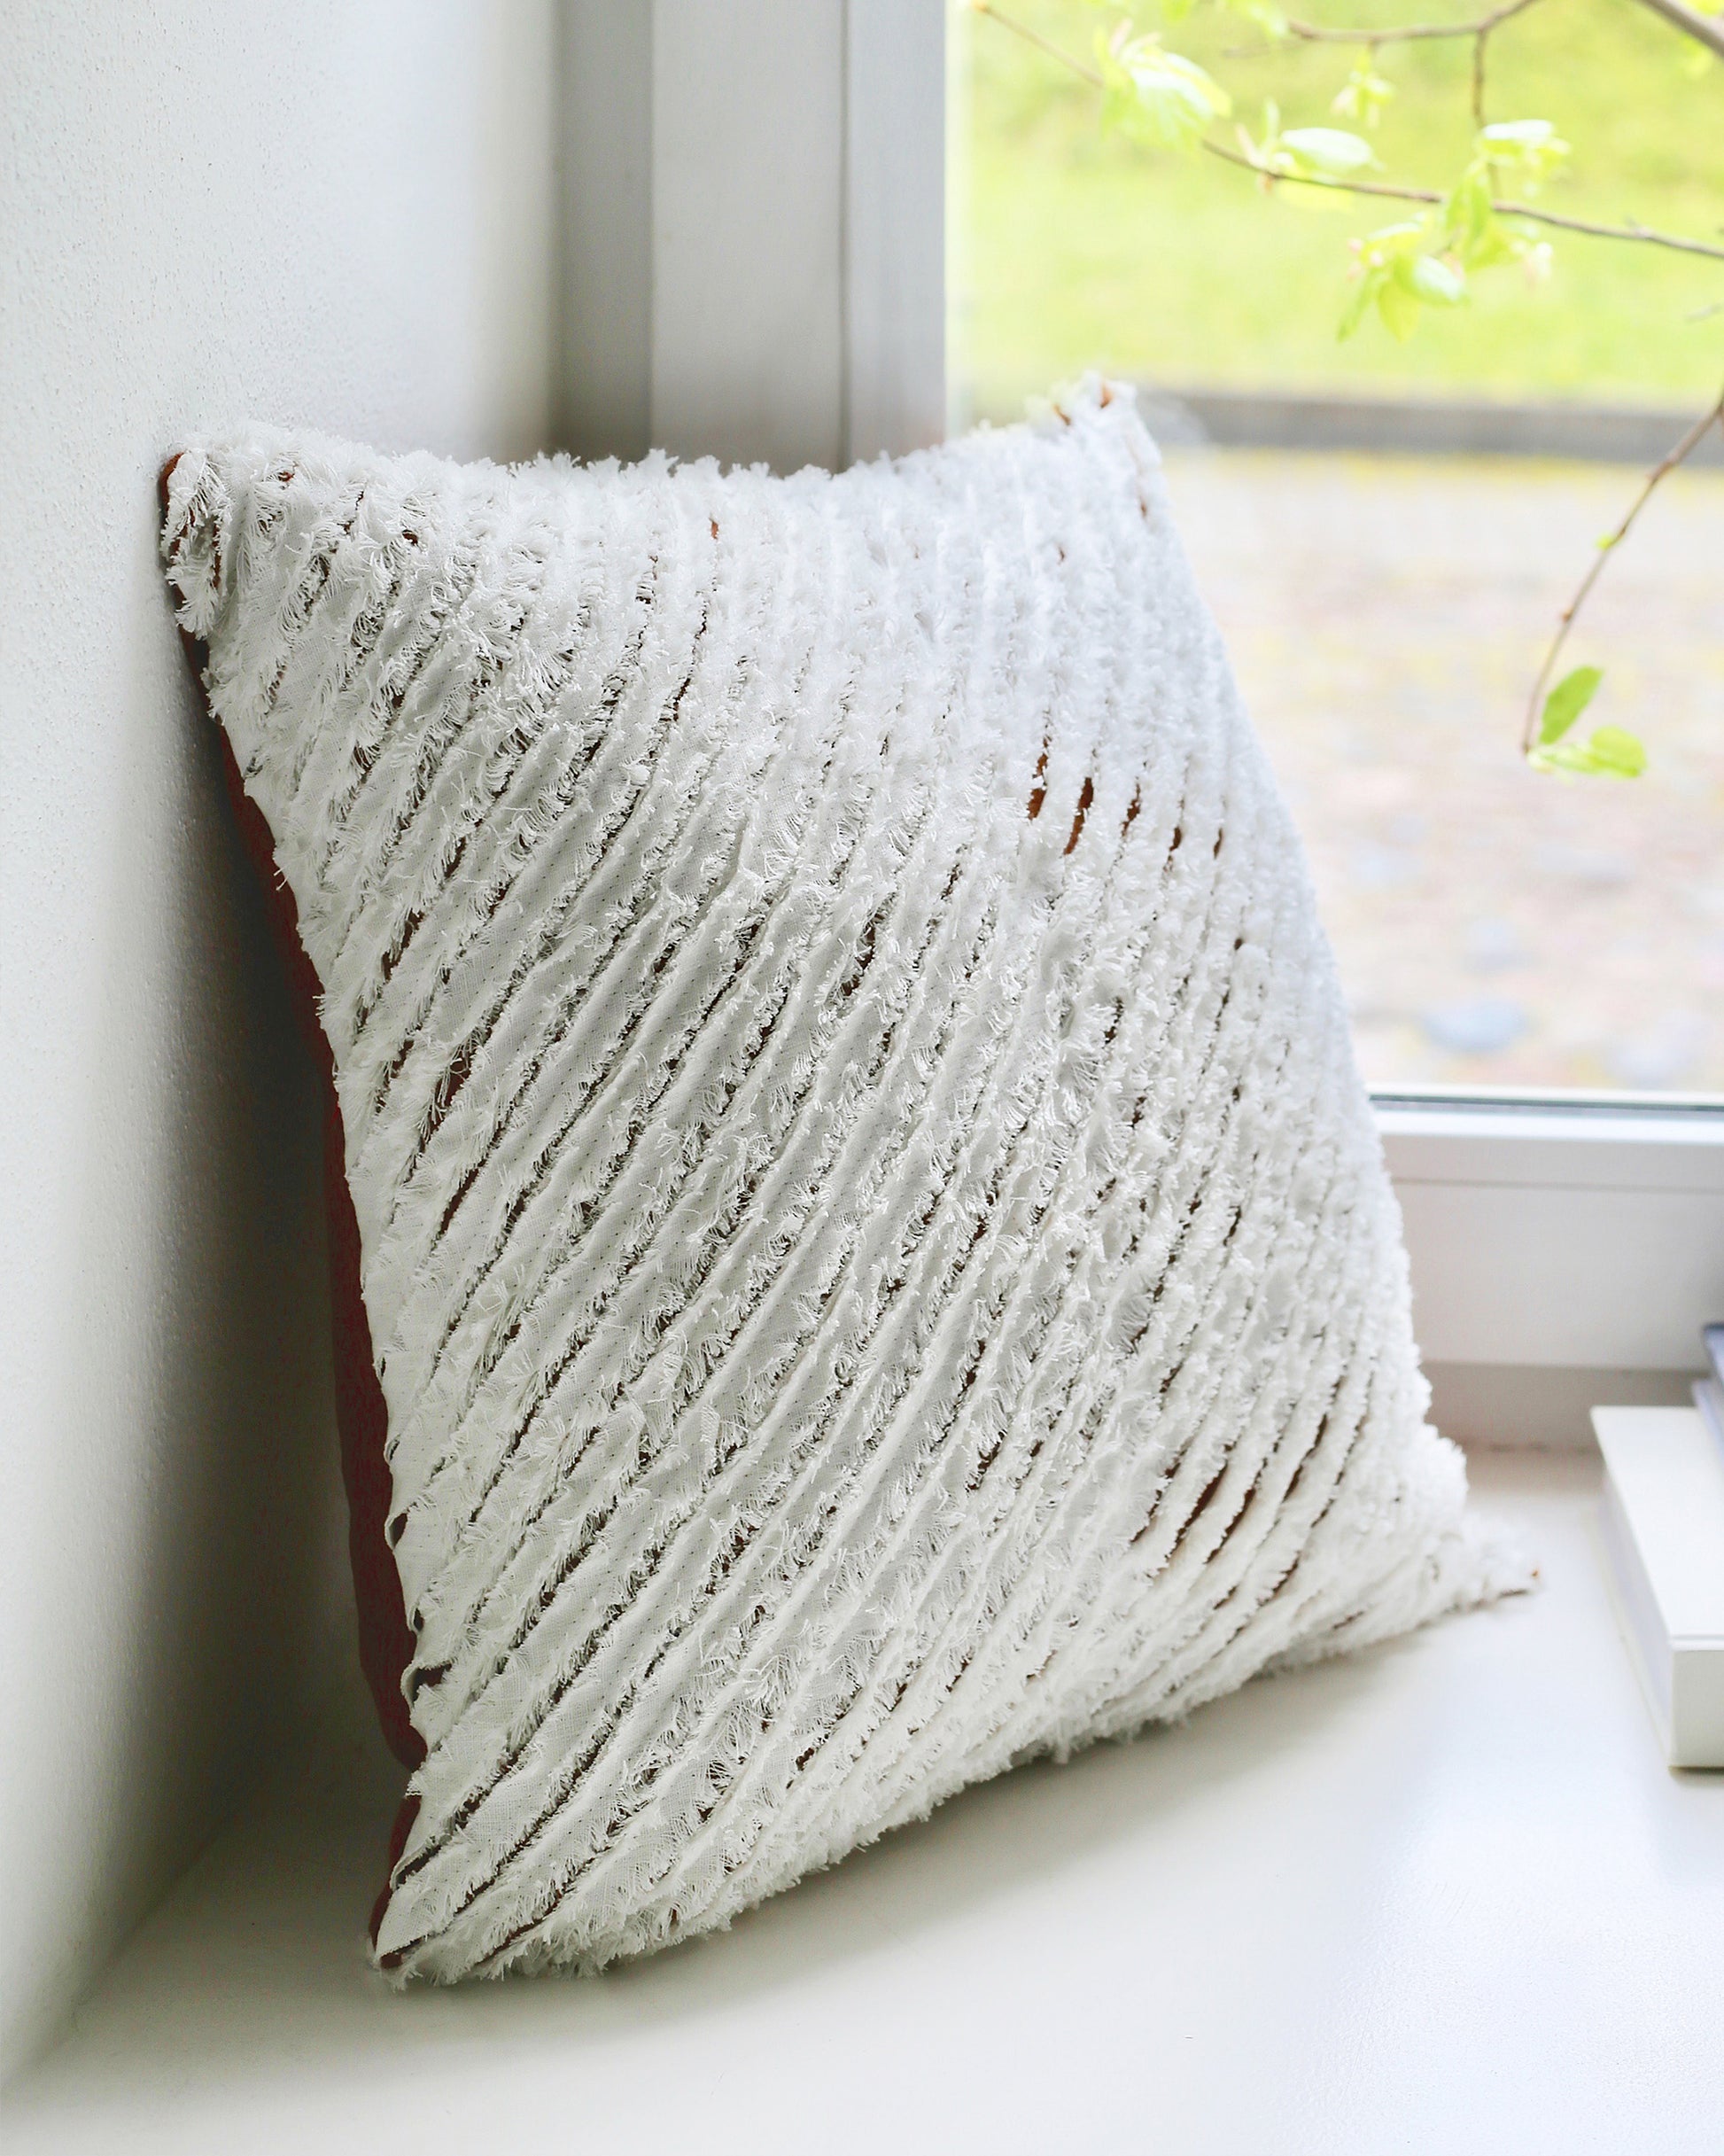 Decorative linen pillow cover with striped fabric in White & Cinnamon - MagicLinen